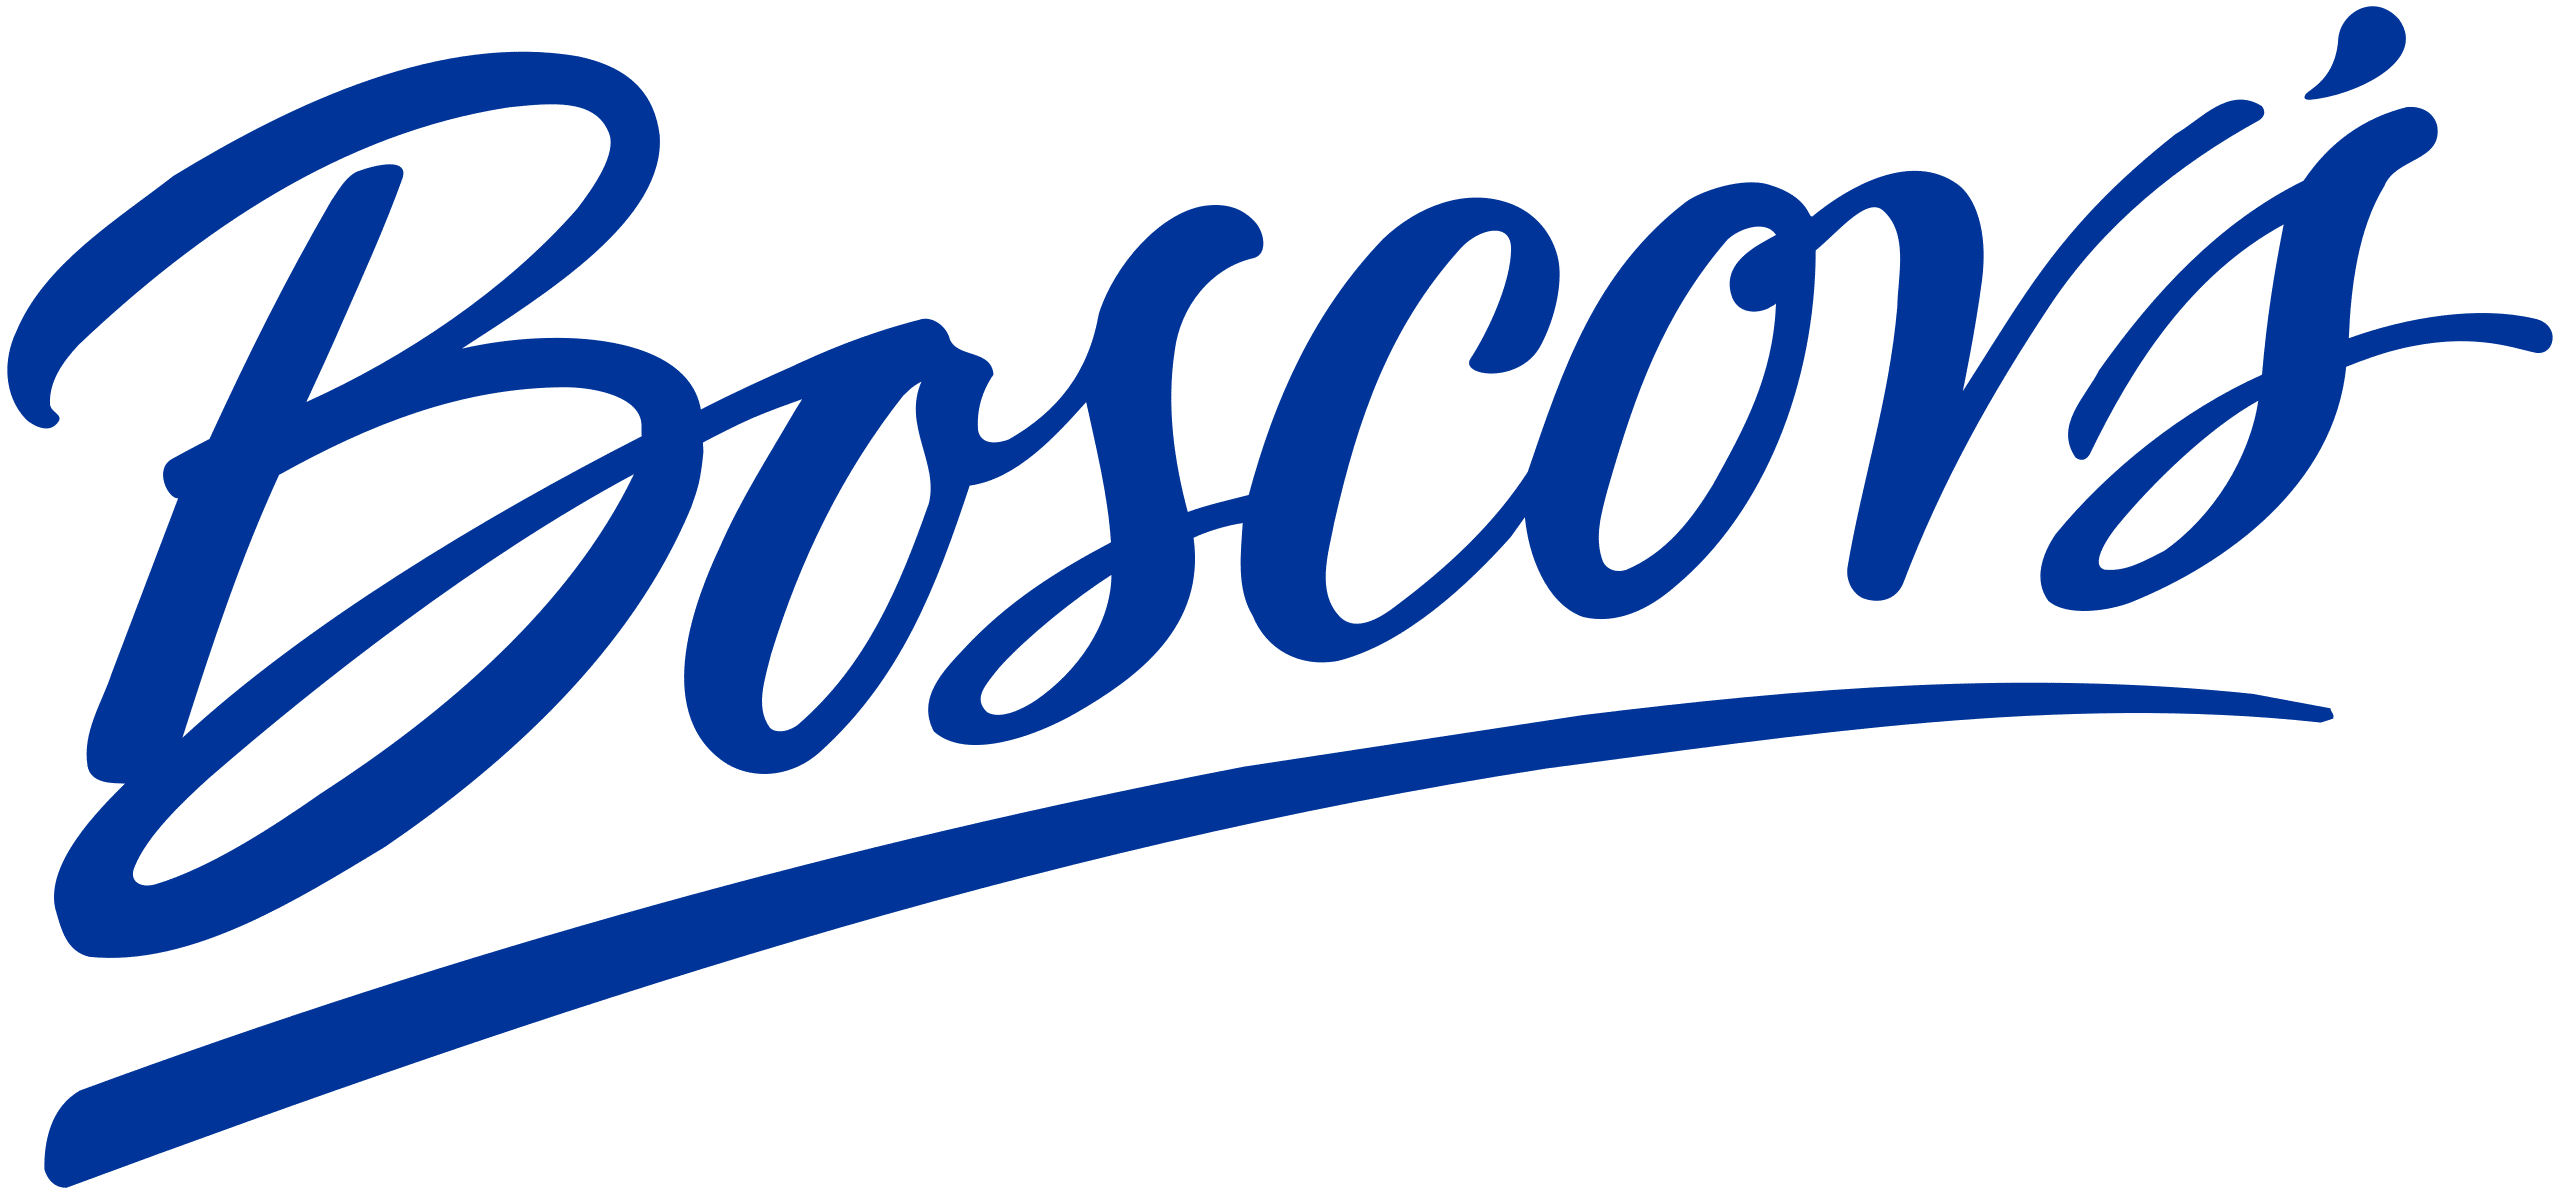 Boscovs logo